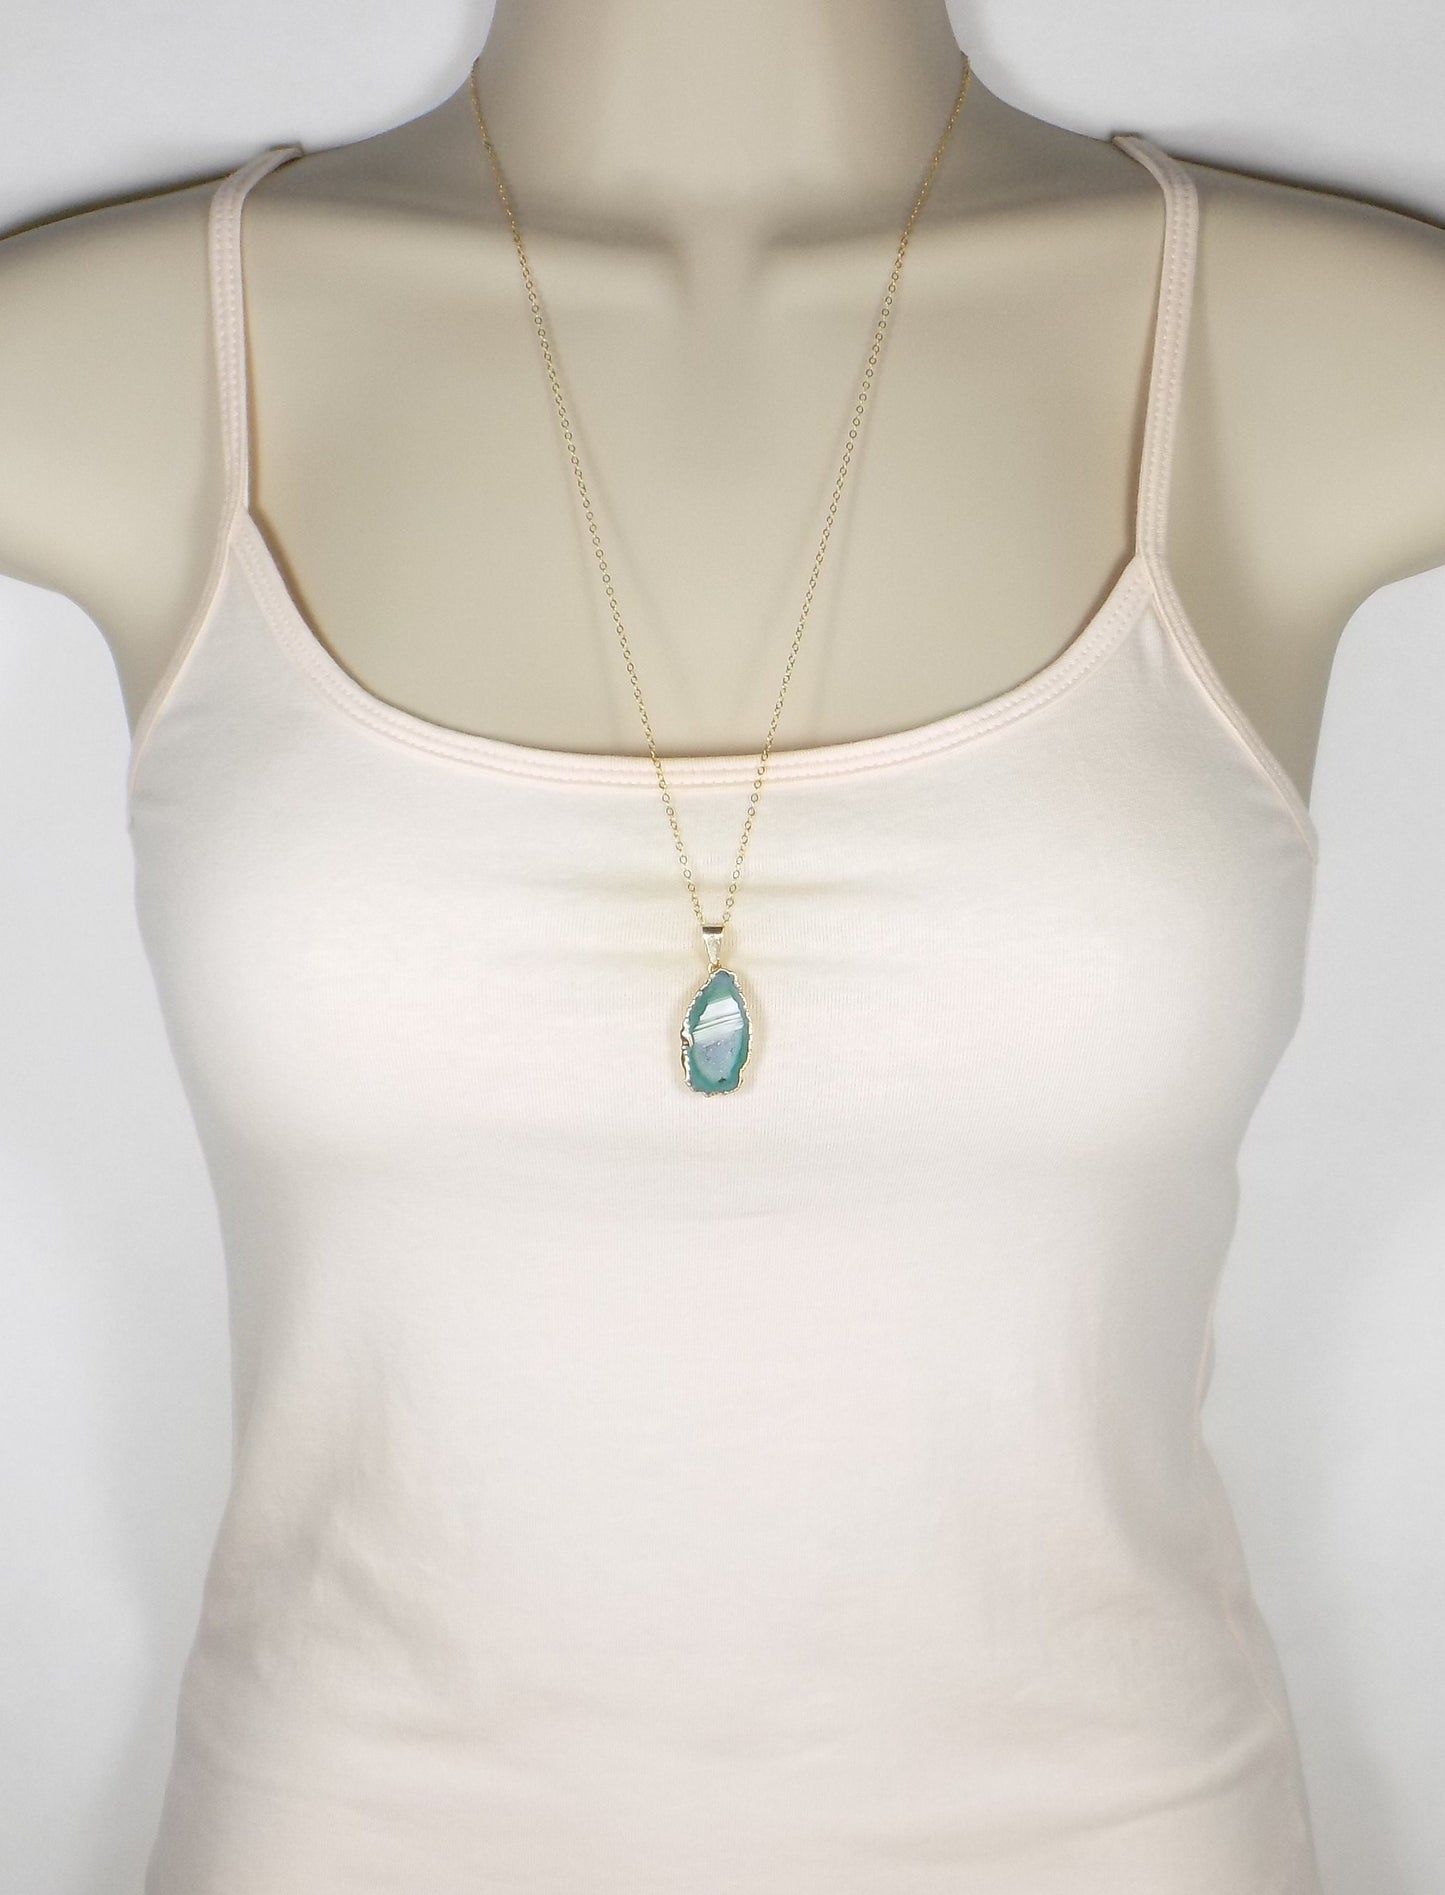 Turquoise Druzy Necklace - Boho Geode Necklace